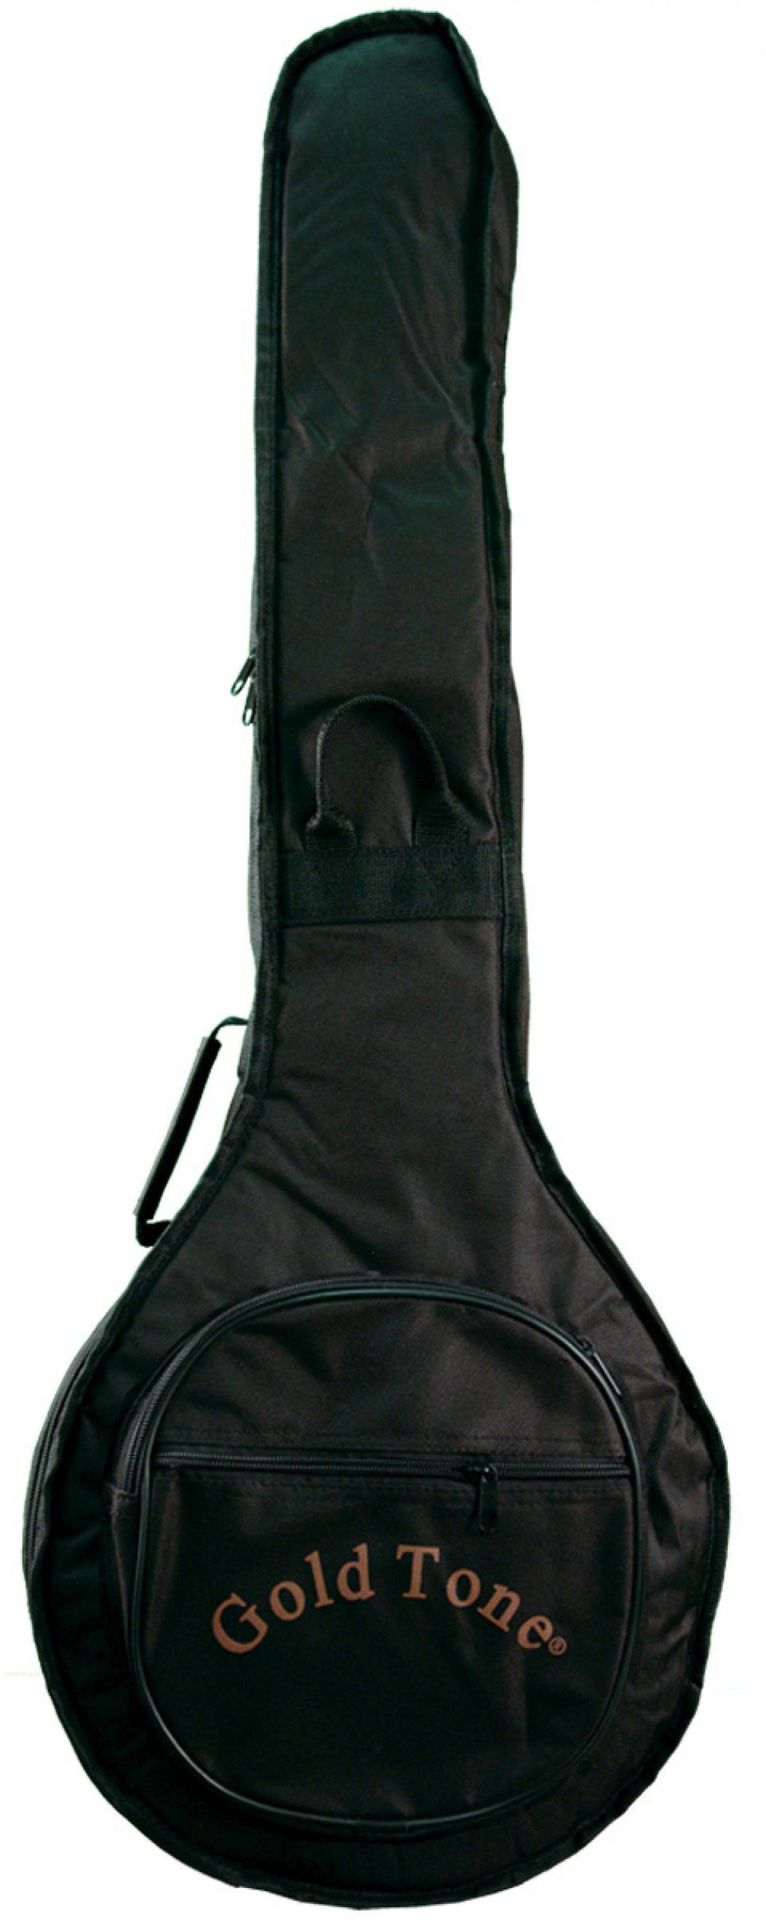 GoldTone AC-1 5-Saiter Open Back Banjo mit Tasche